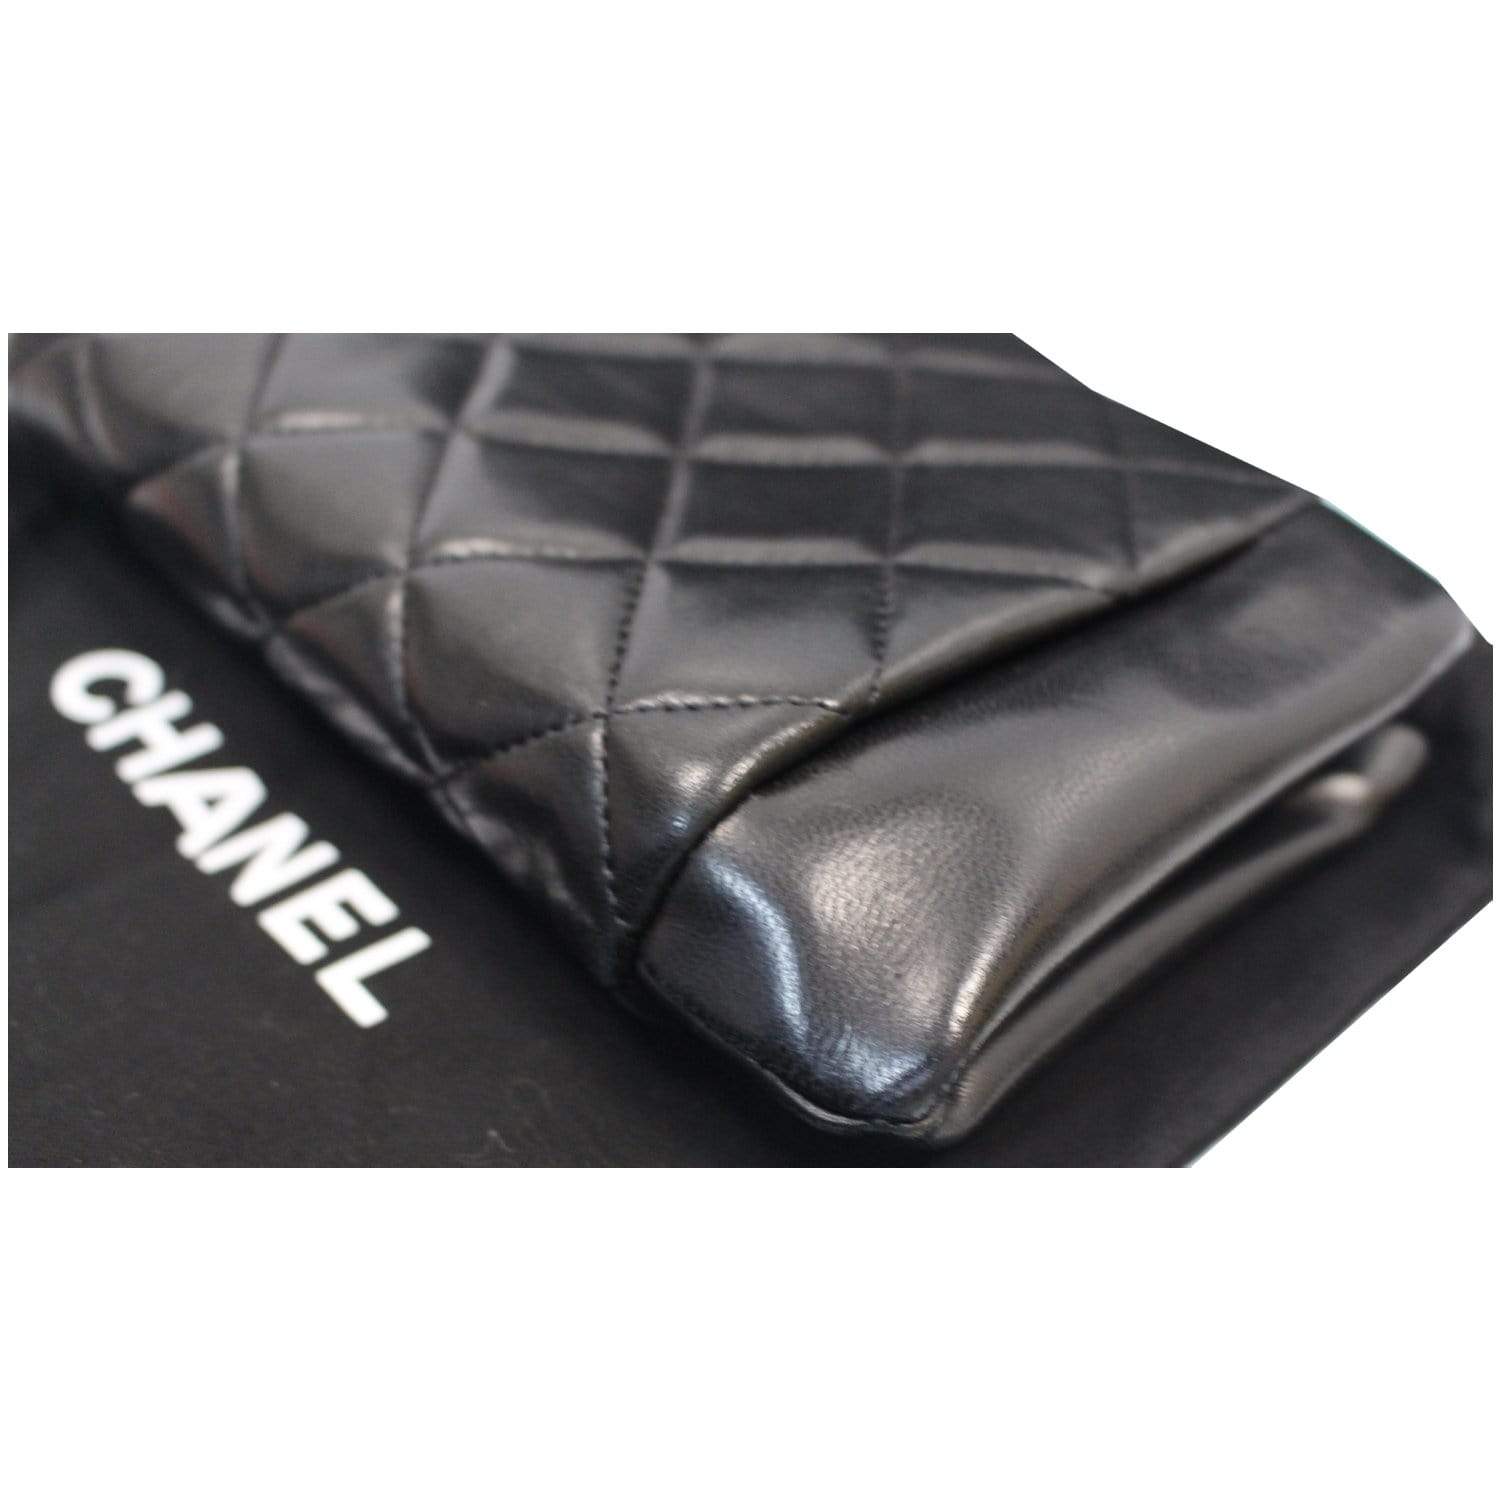 Chanel Timeless CC Lock Lambskin Leather Clutch Bag